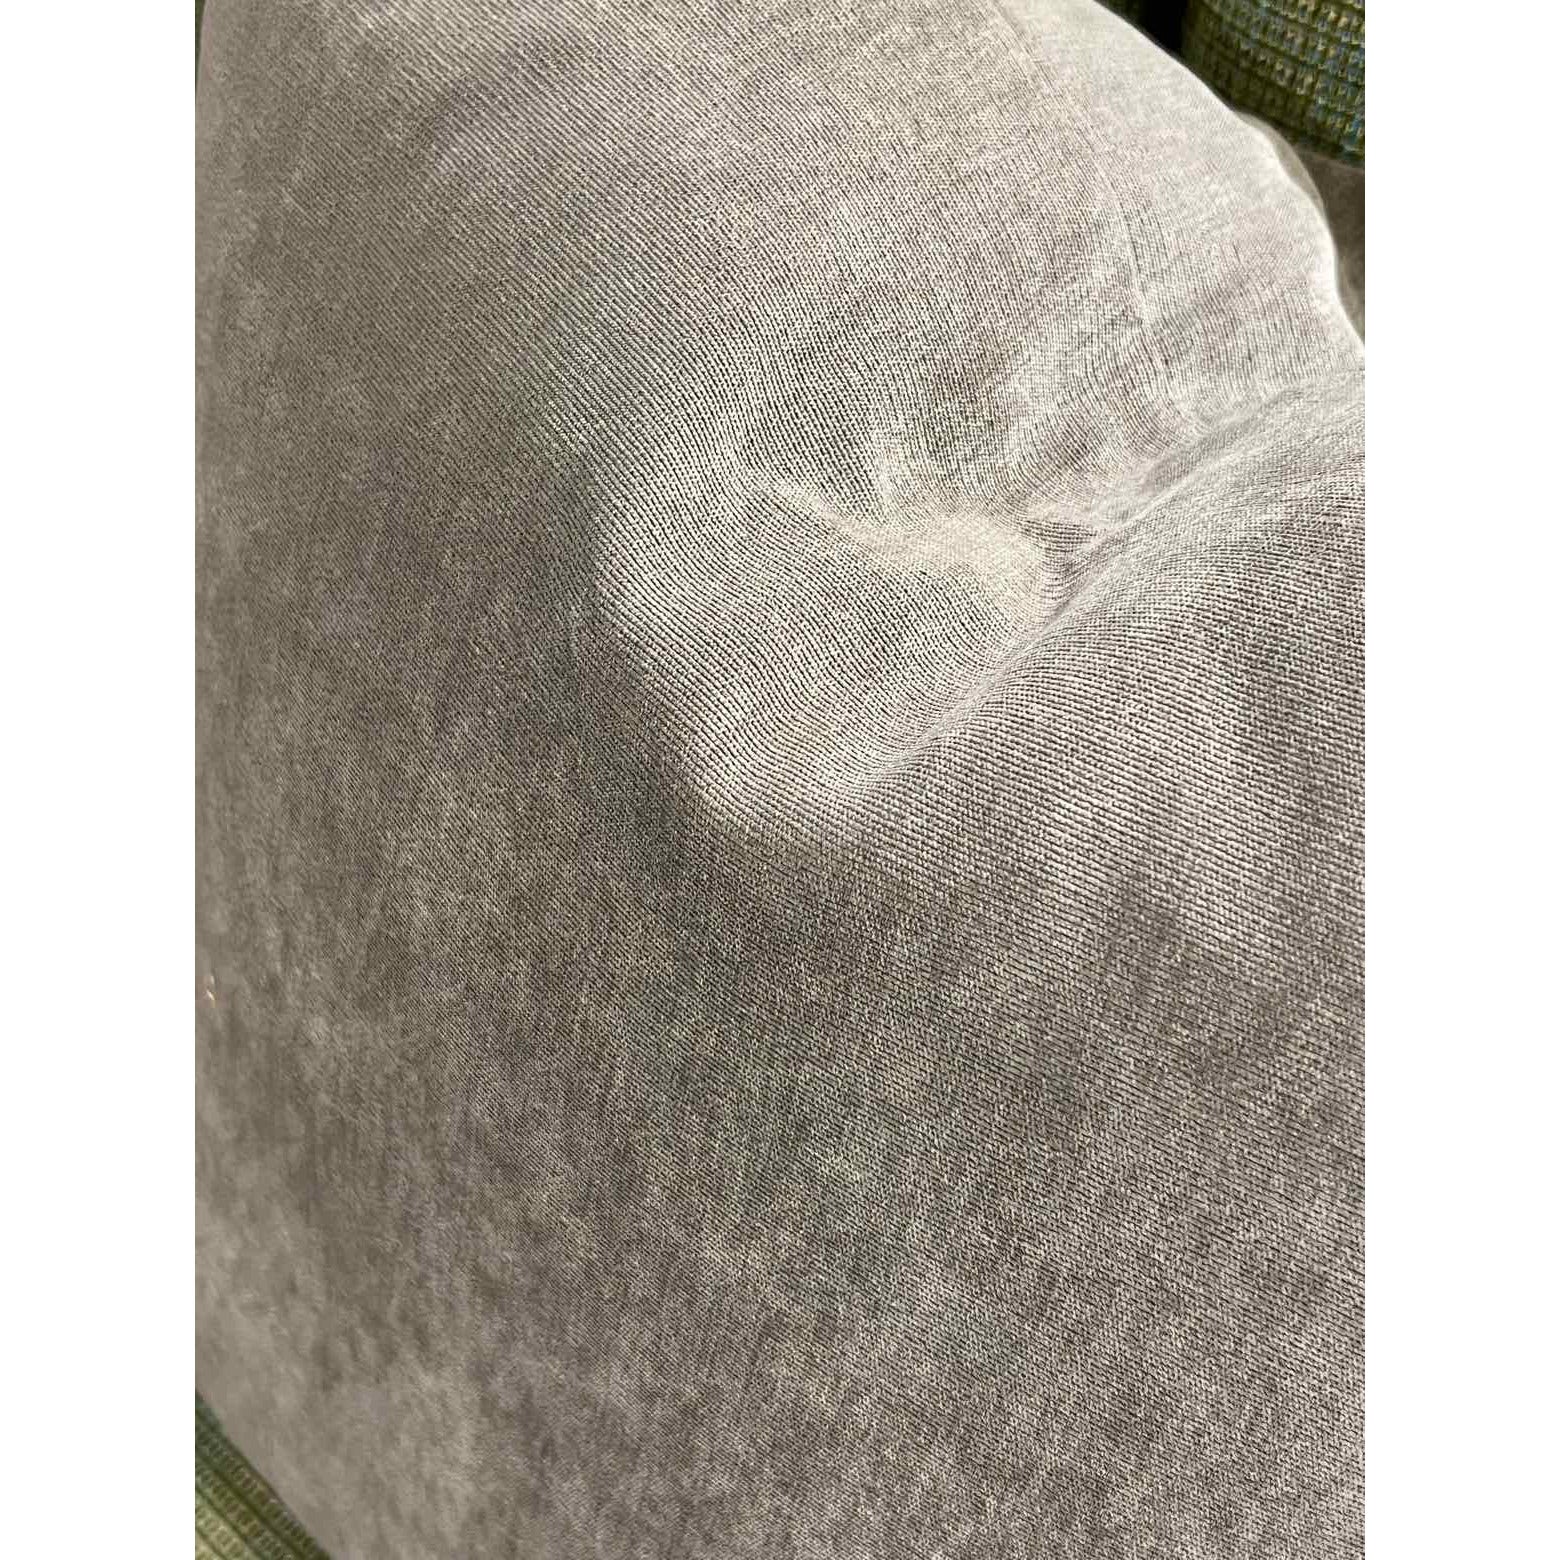 Large Medium Grey Velvet Pillow - colletteconsignment.com